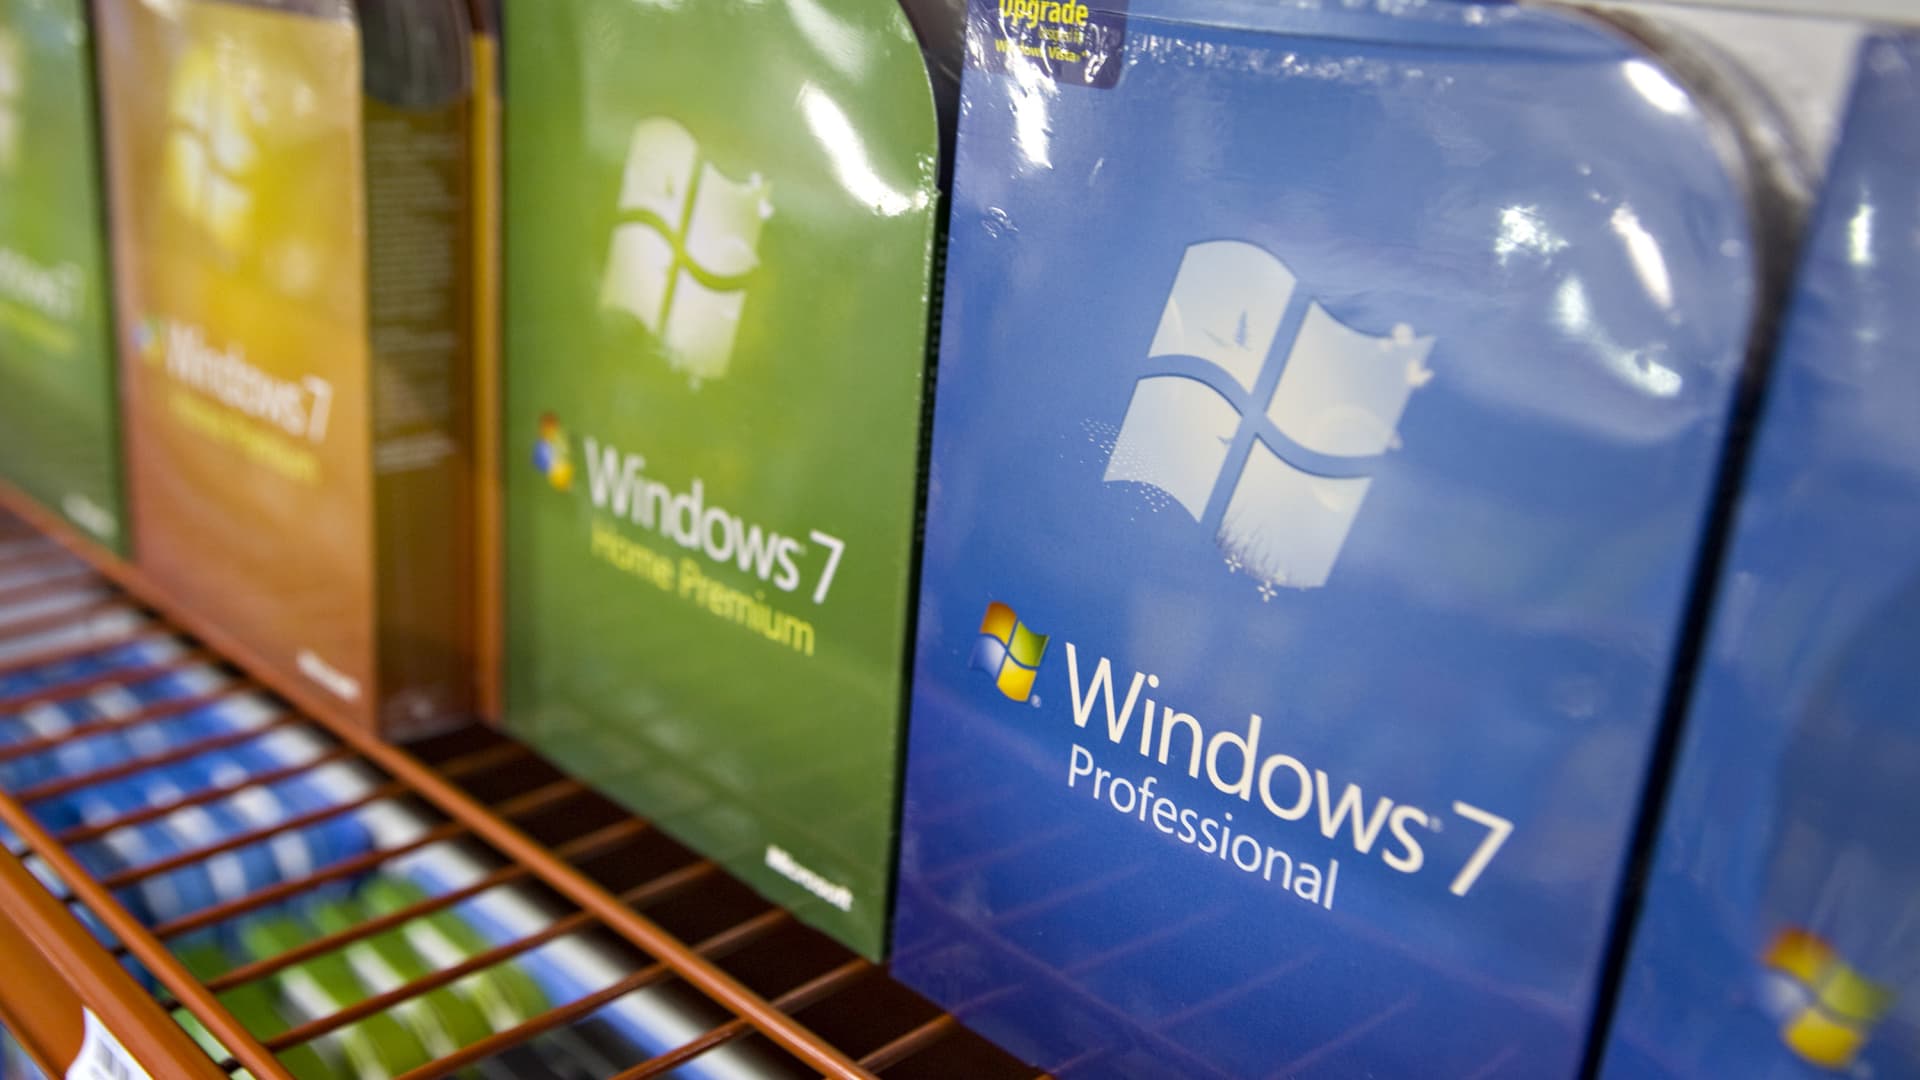 Microsoft Windows 7 support ends Jan. 14